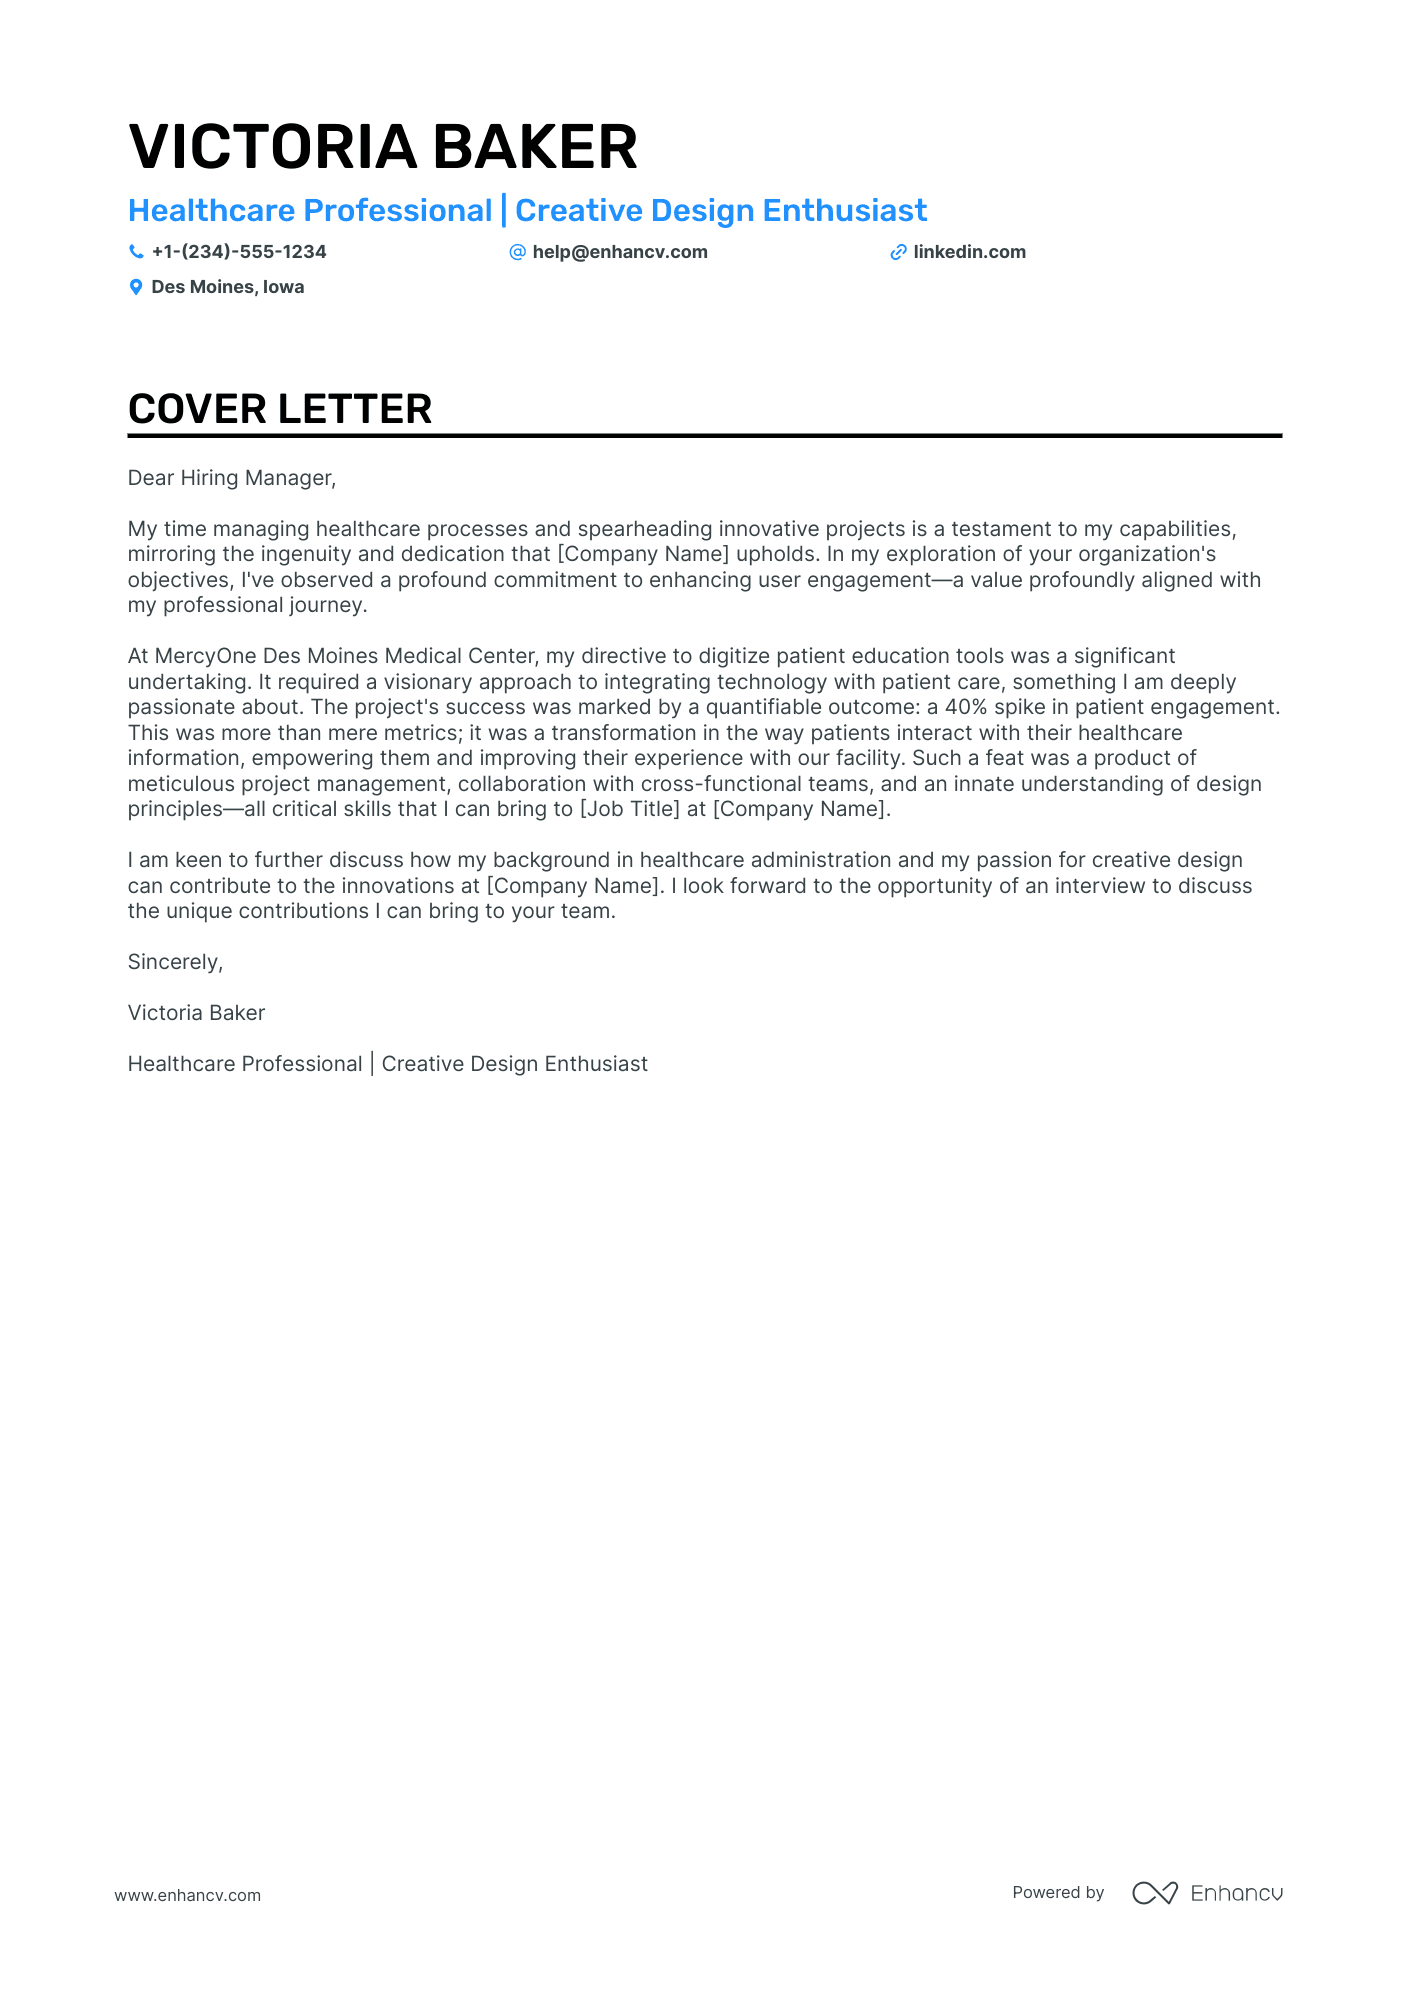 Career Change cover letter